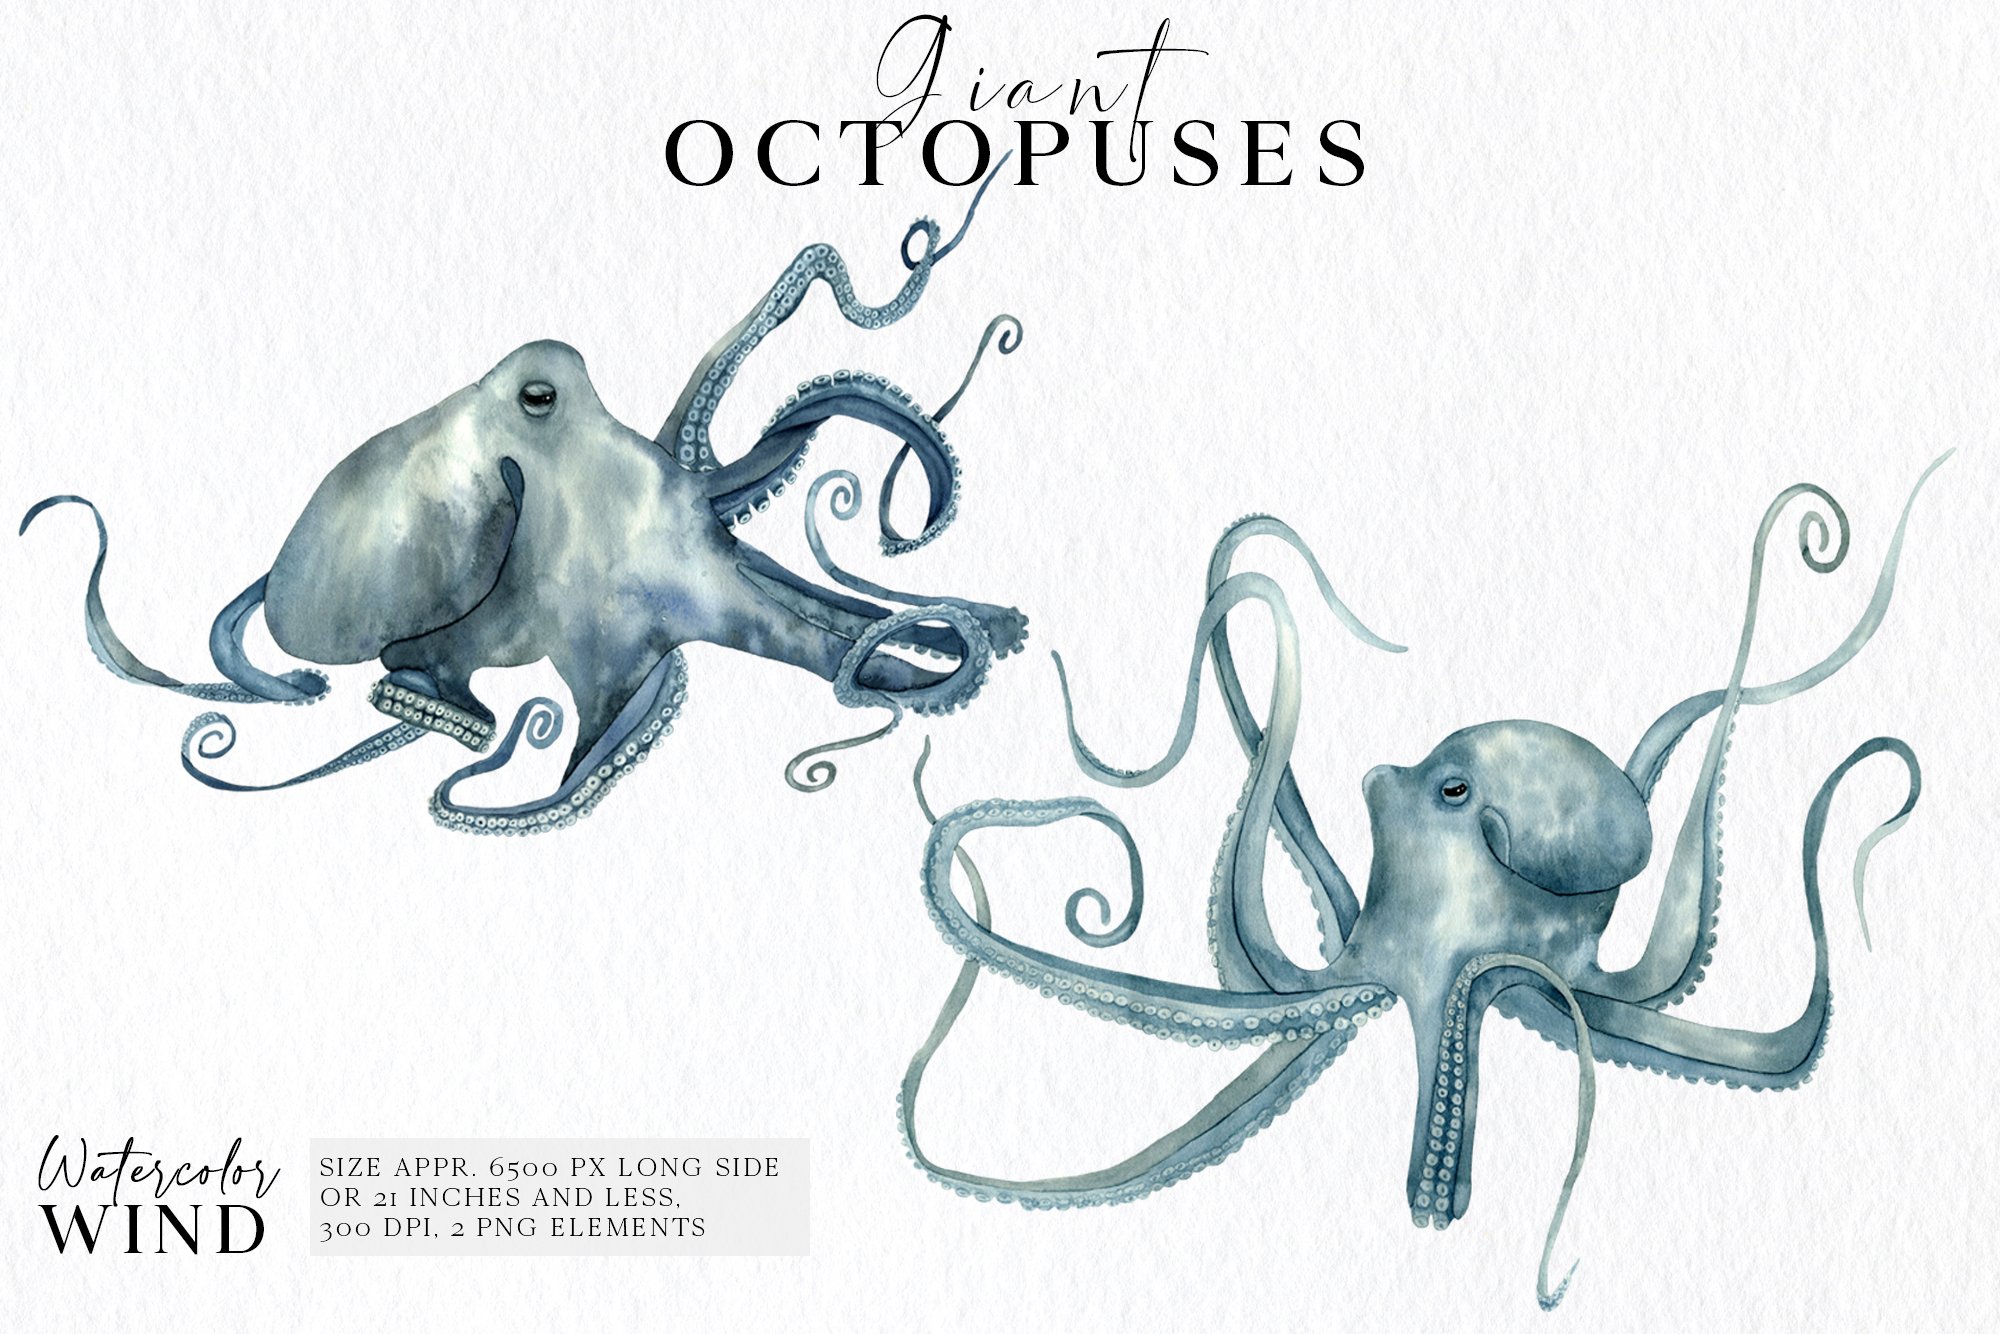 So beautiful octopuses.